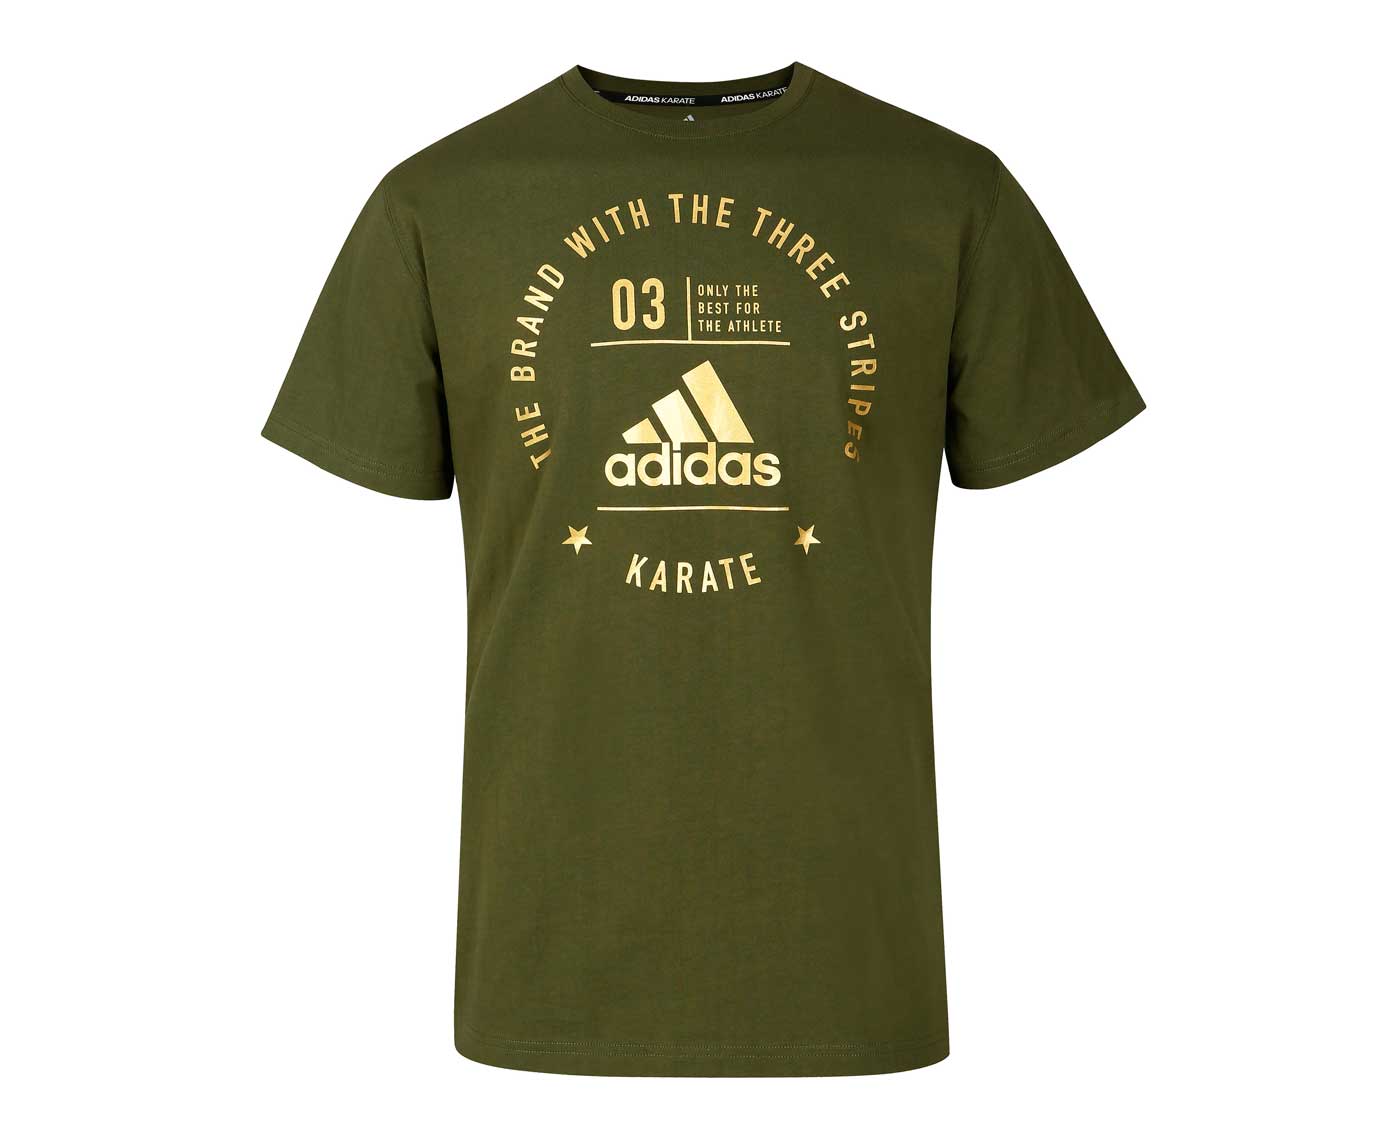 Футболка The Brand With The Three Stripes T-Shirt Karate зелено-золотая